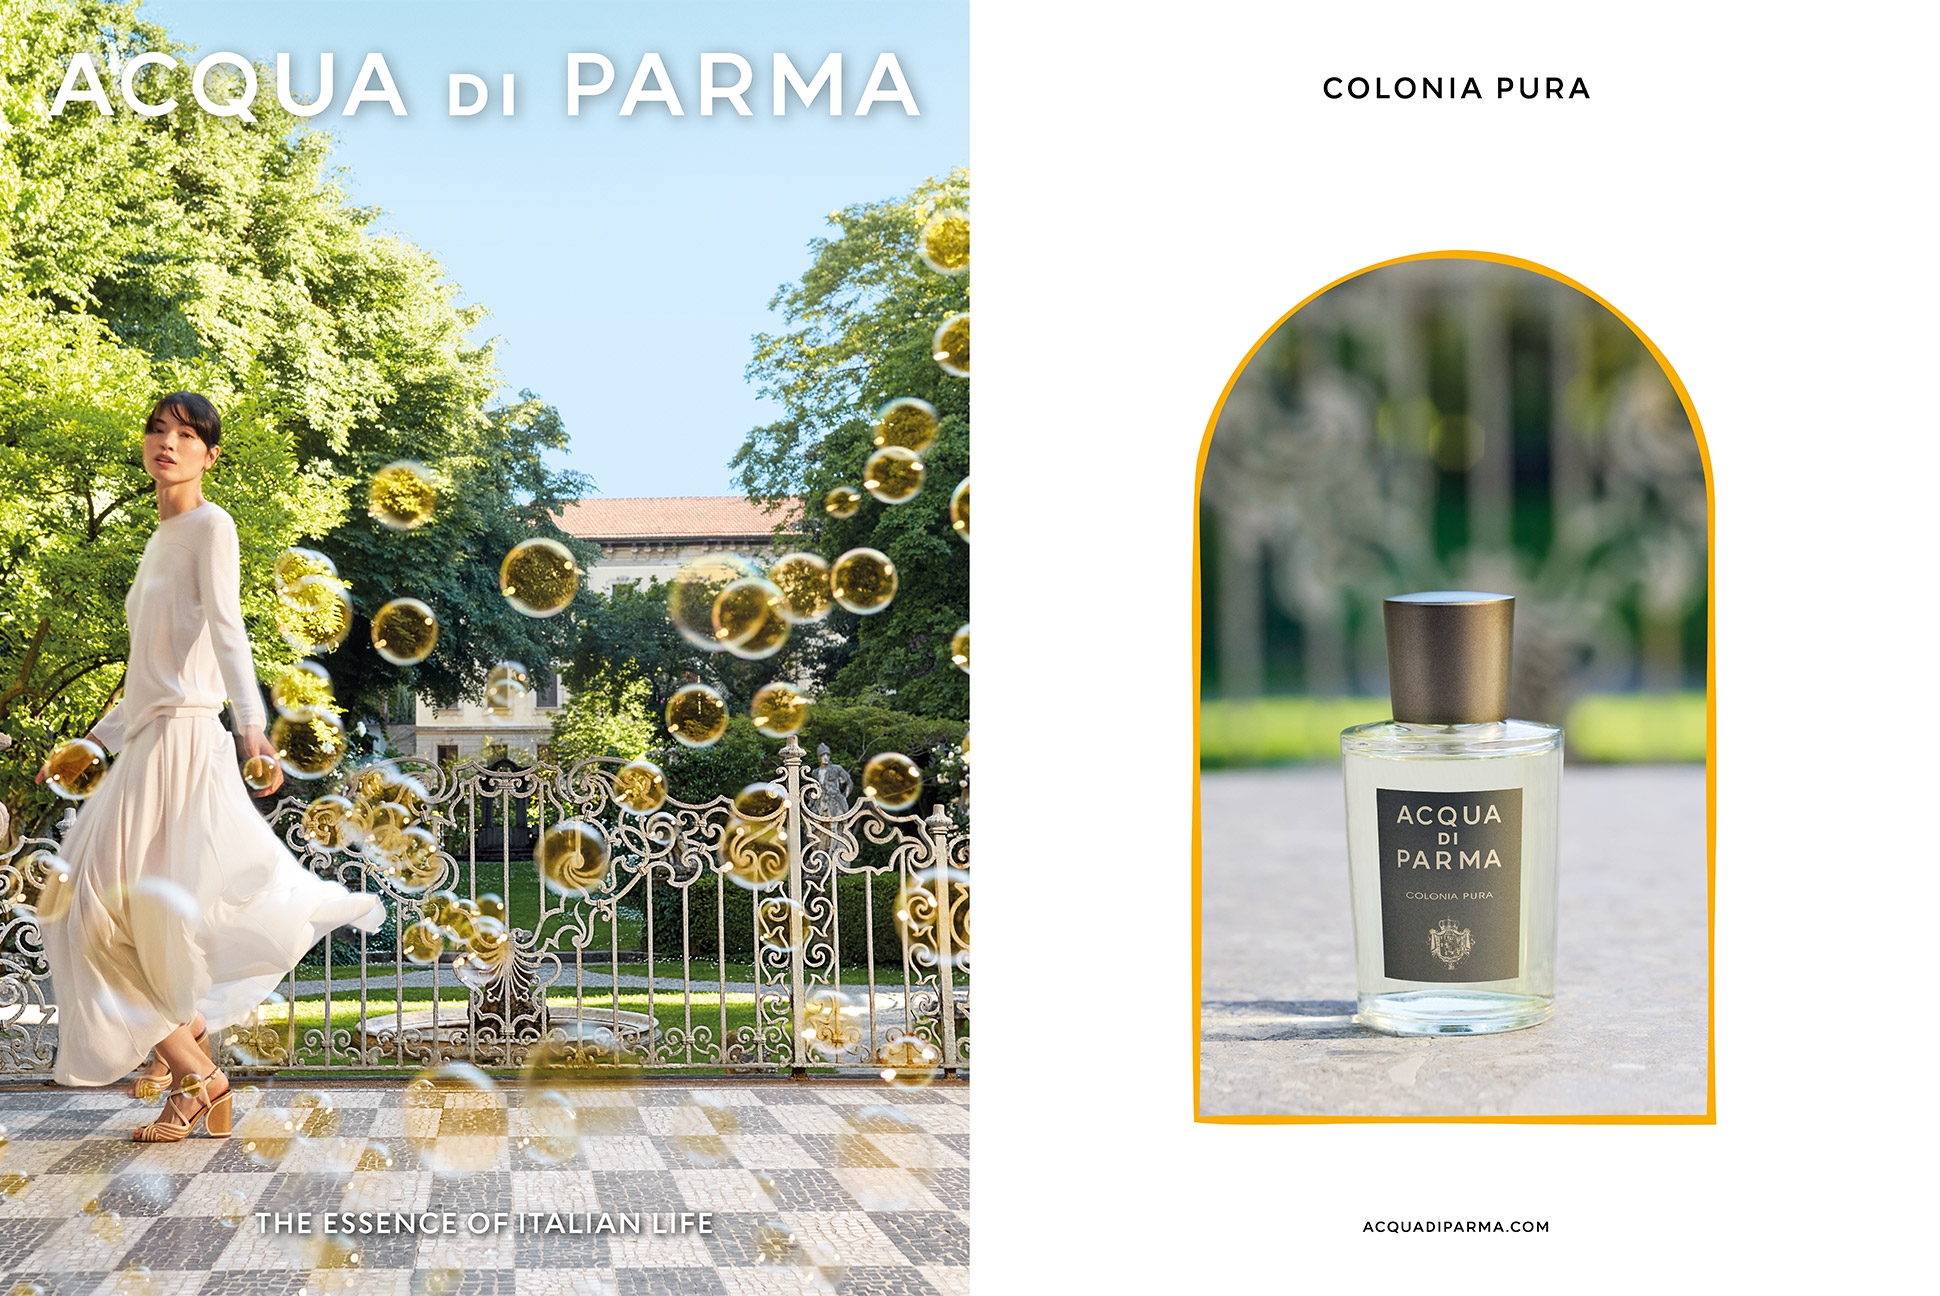 ACQUA DI PARMA: The perfect balance of tradition and modernity 